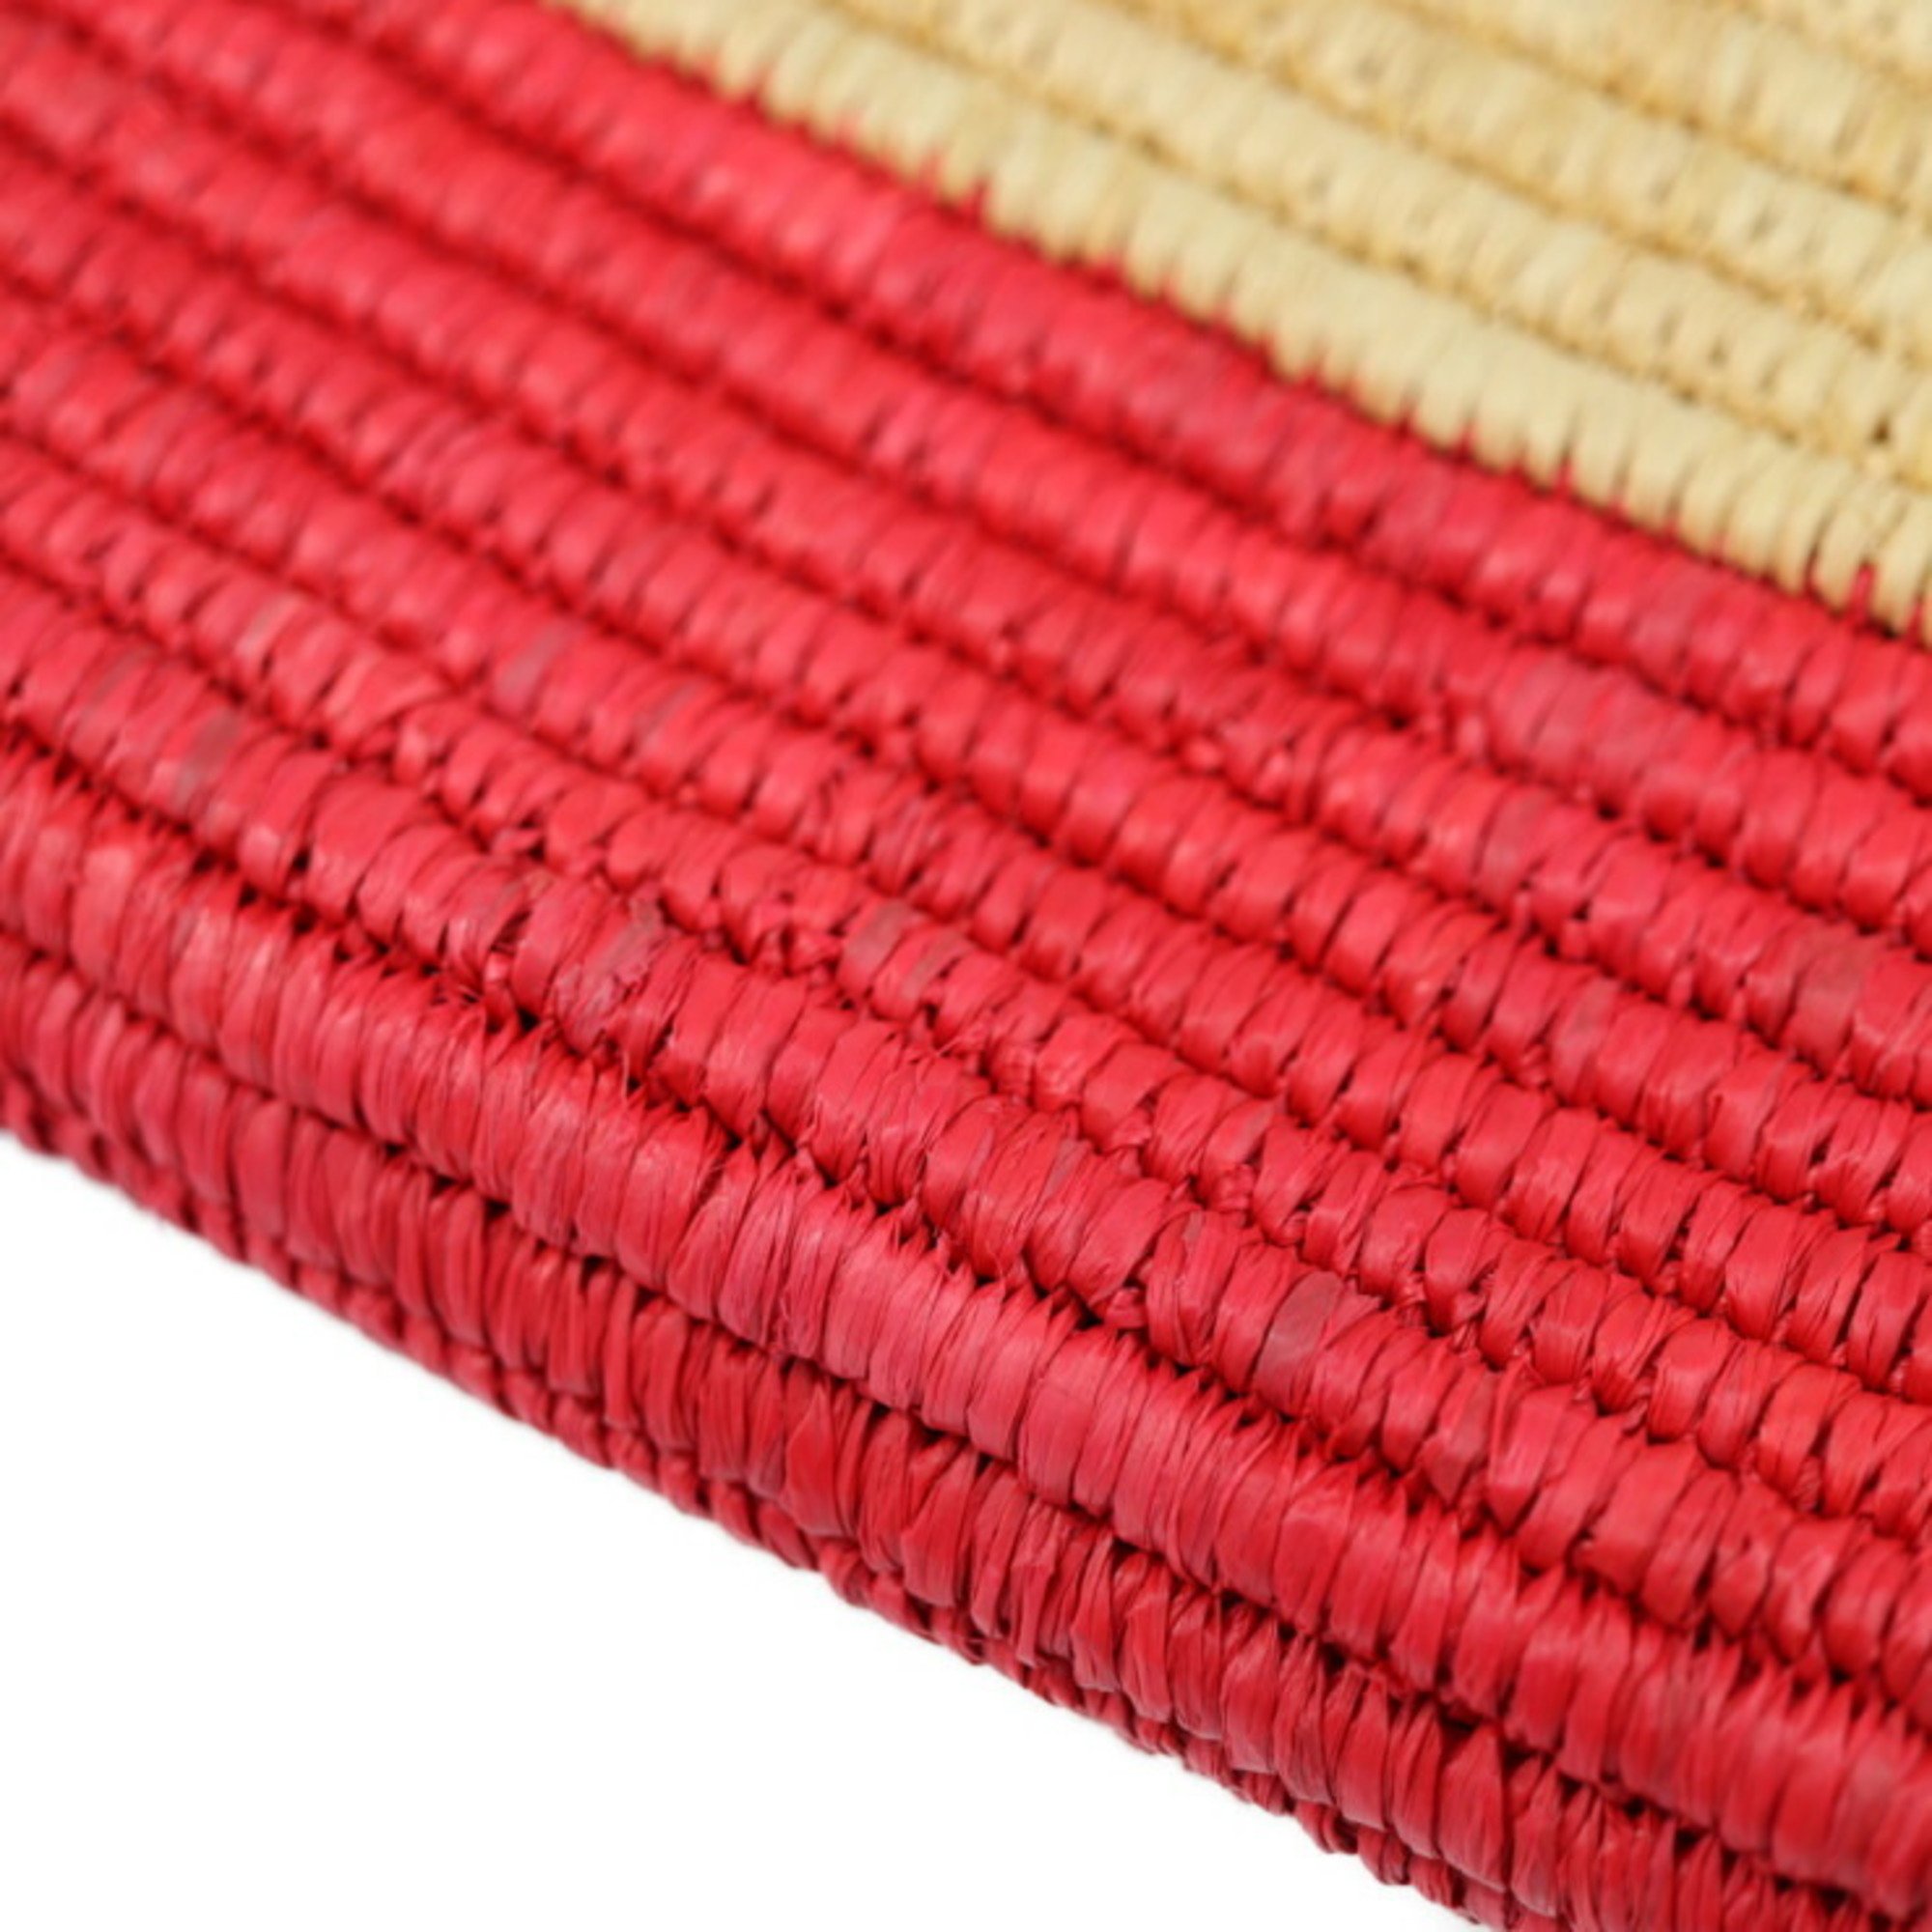 BALENCIAGA Balenciaga clutch bag 339549 raffia leather natural red straw basket second